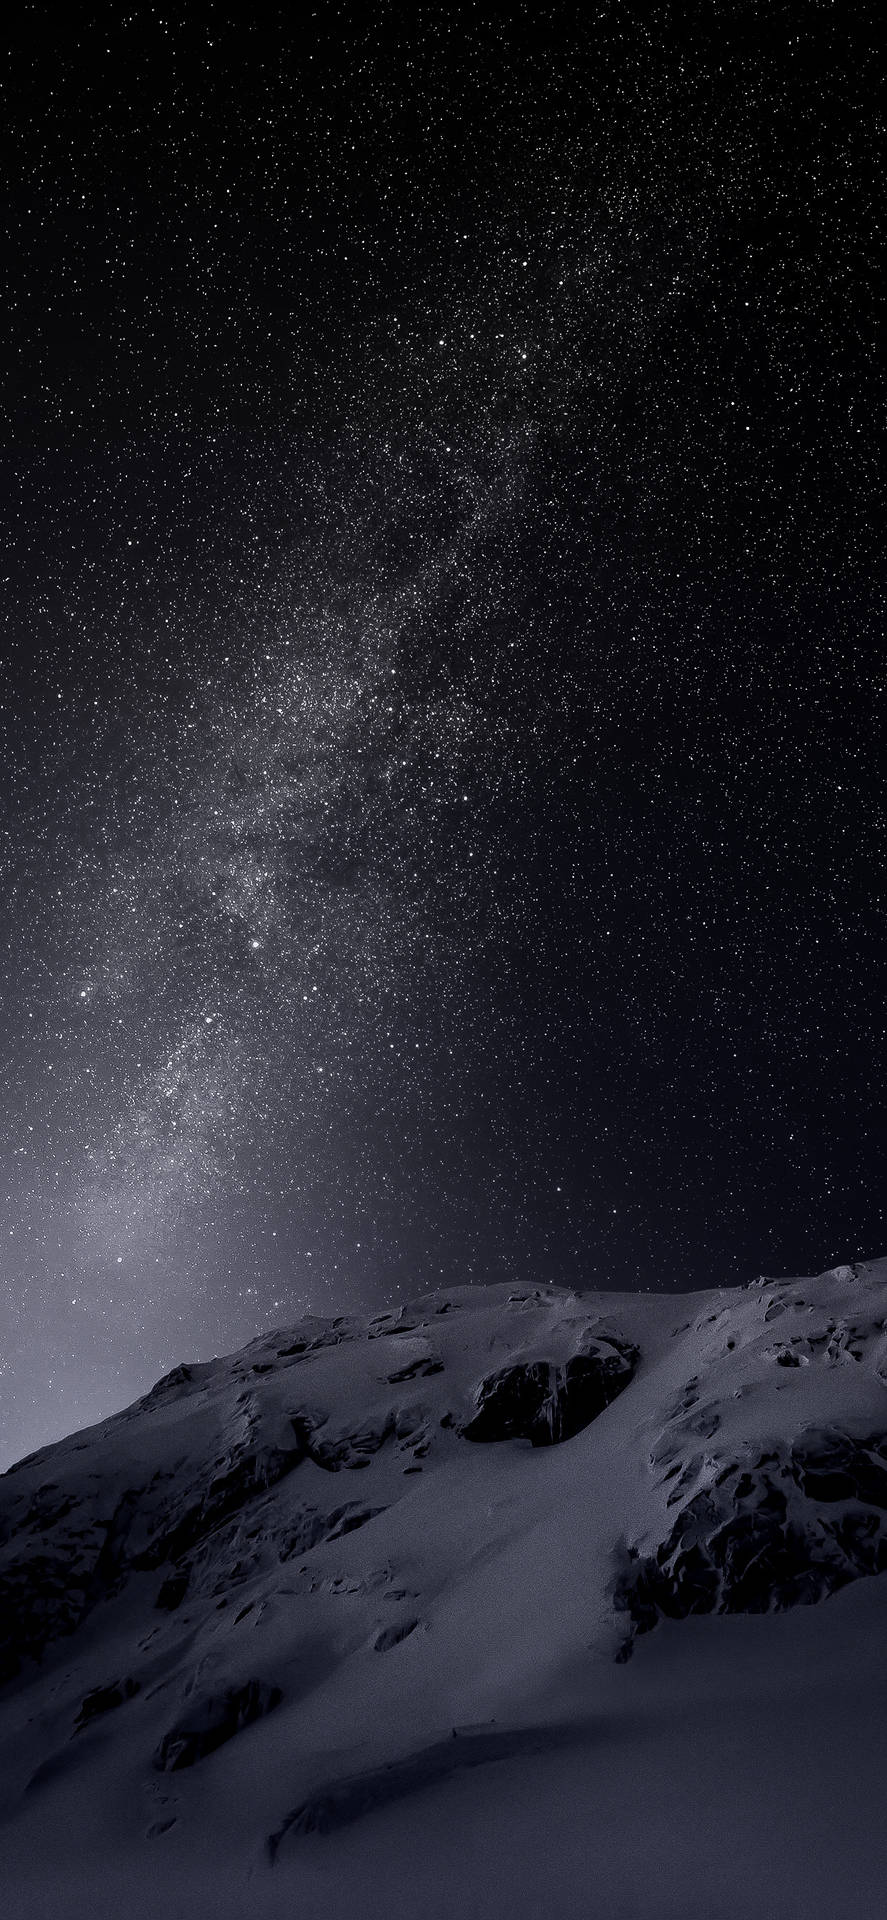 Mørk Snowy Mountain Iphone Wallpaper